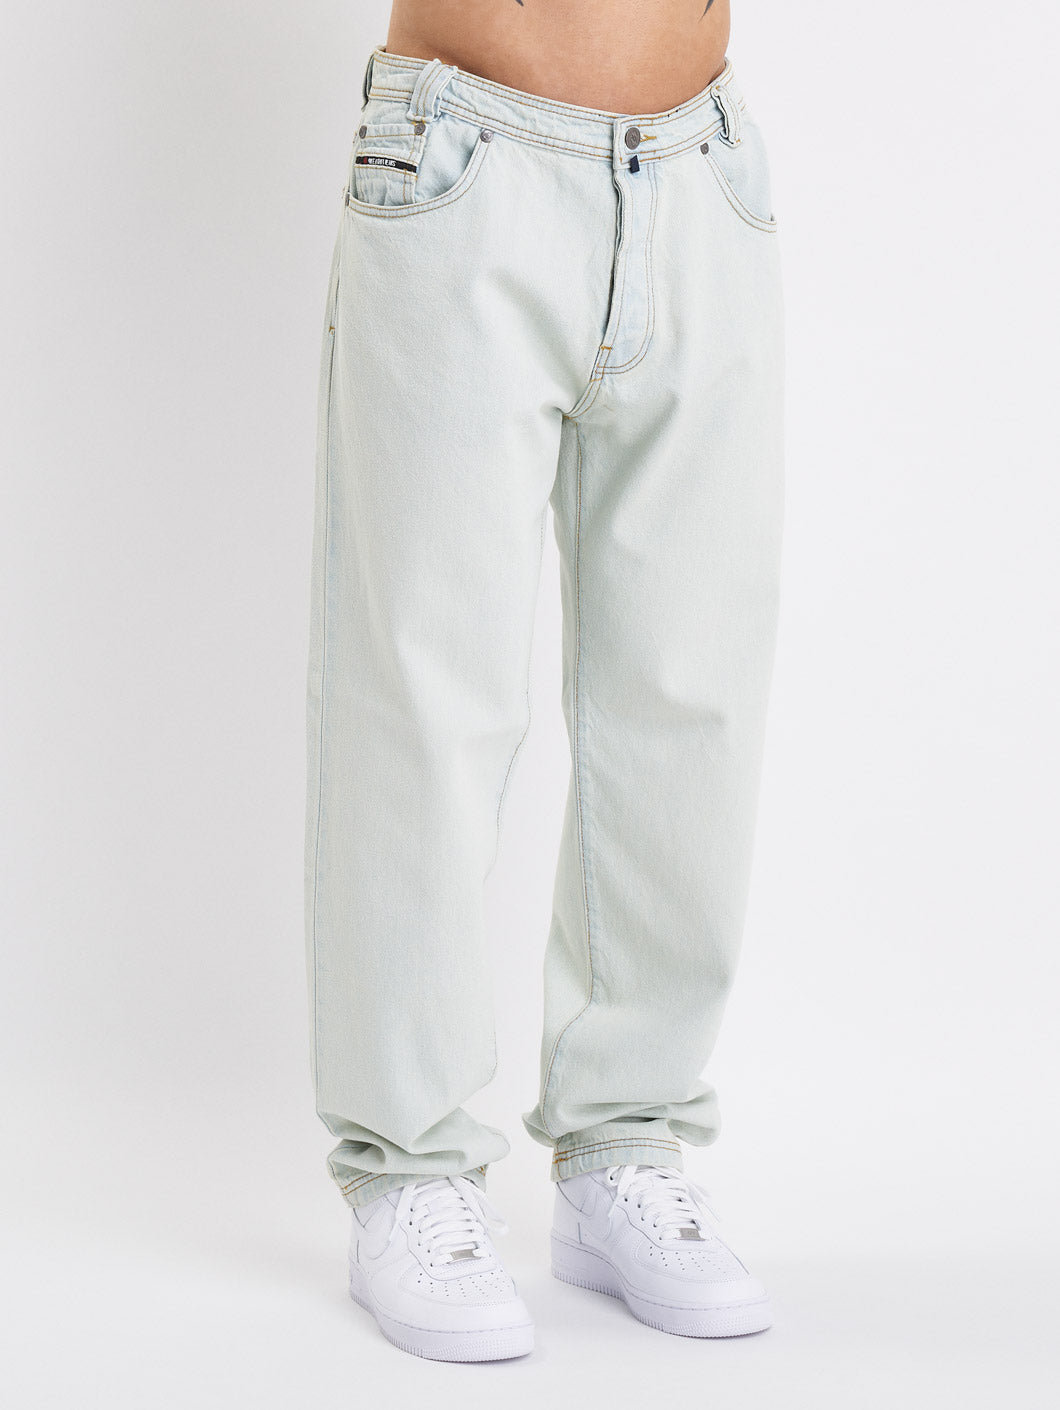 mox unleashed jeans lightblue - 5